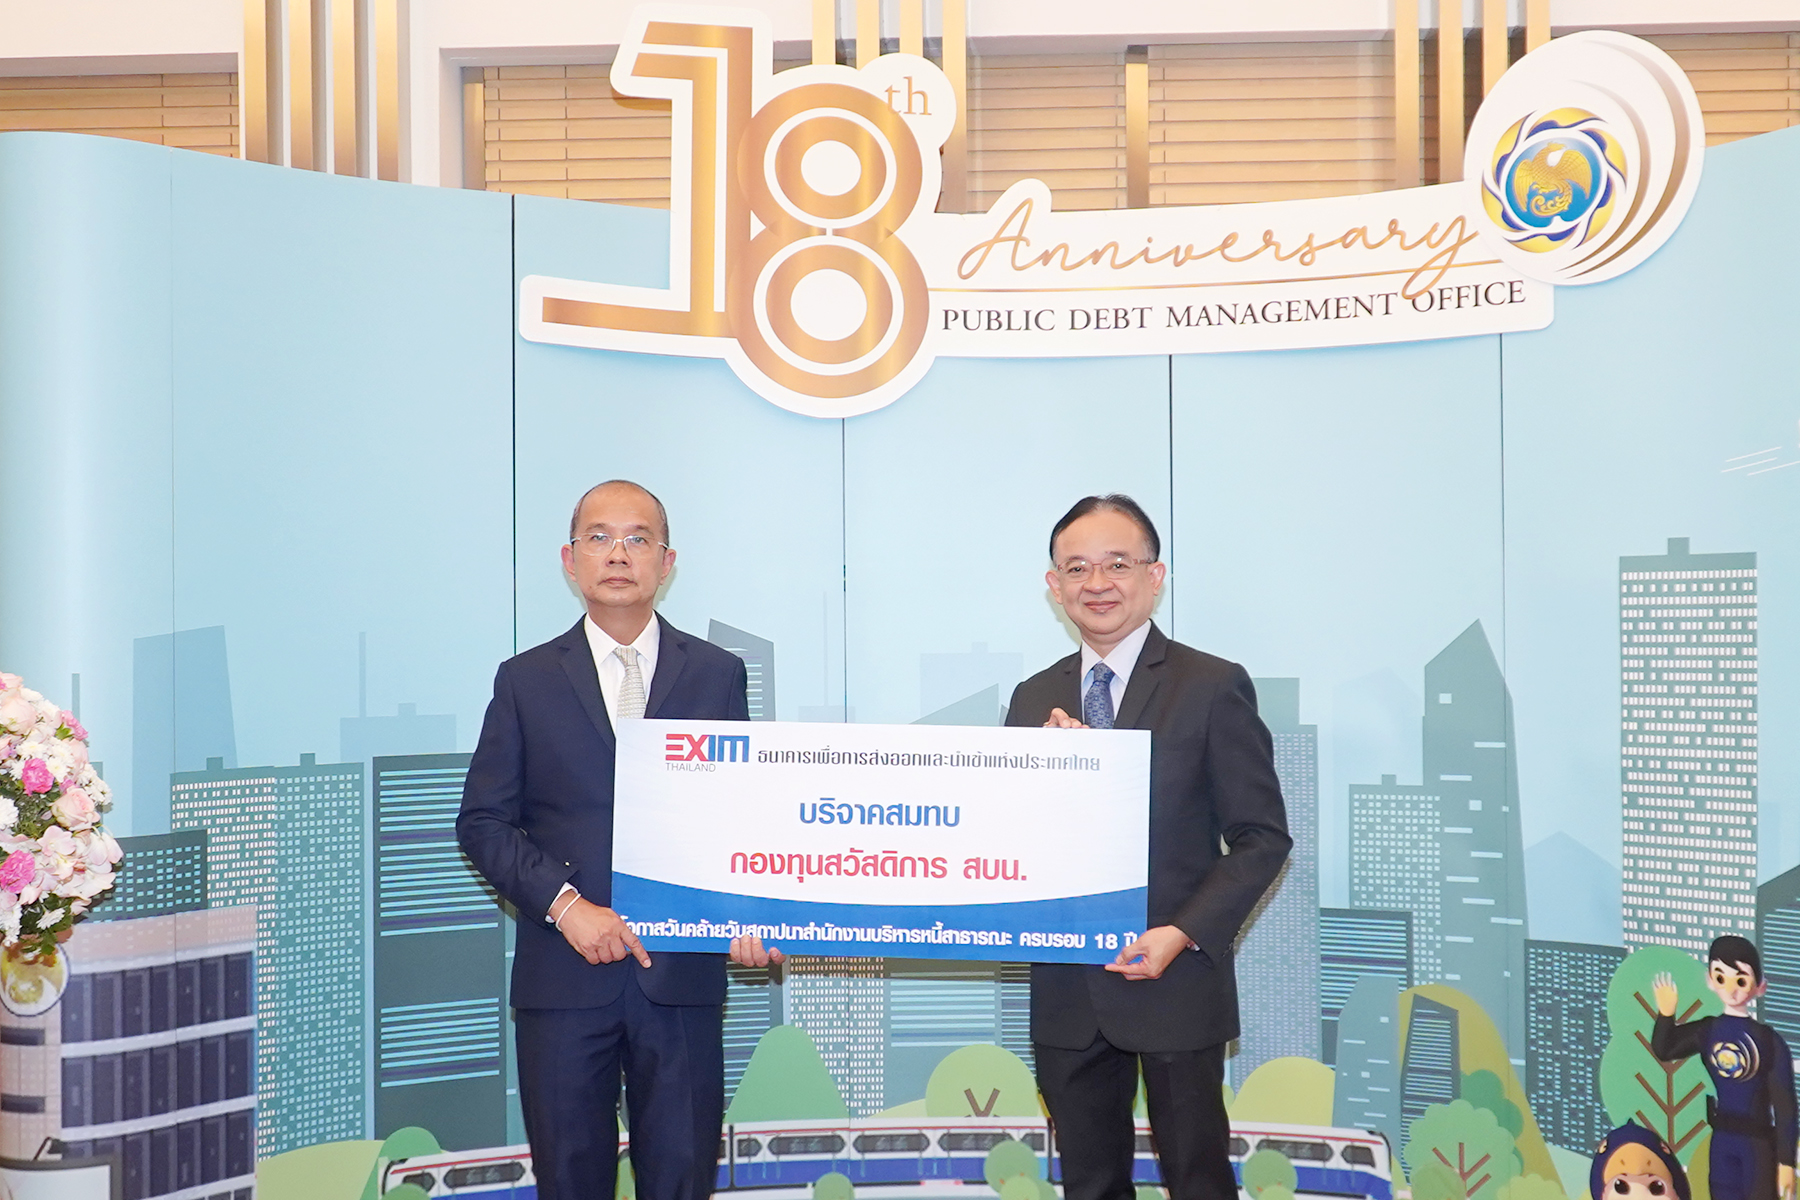 EXIM Thailand Congratulates 18th Anniversary of  Public Debt Management Office